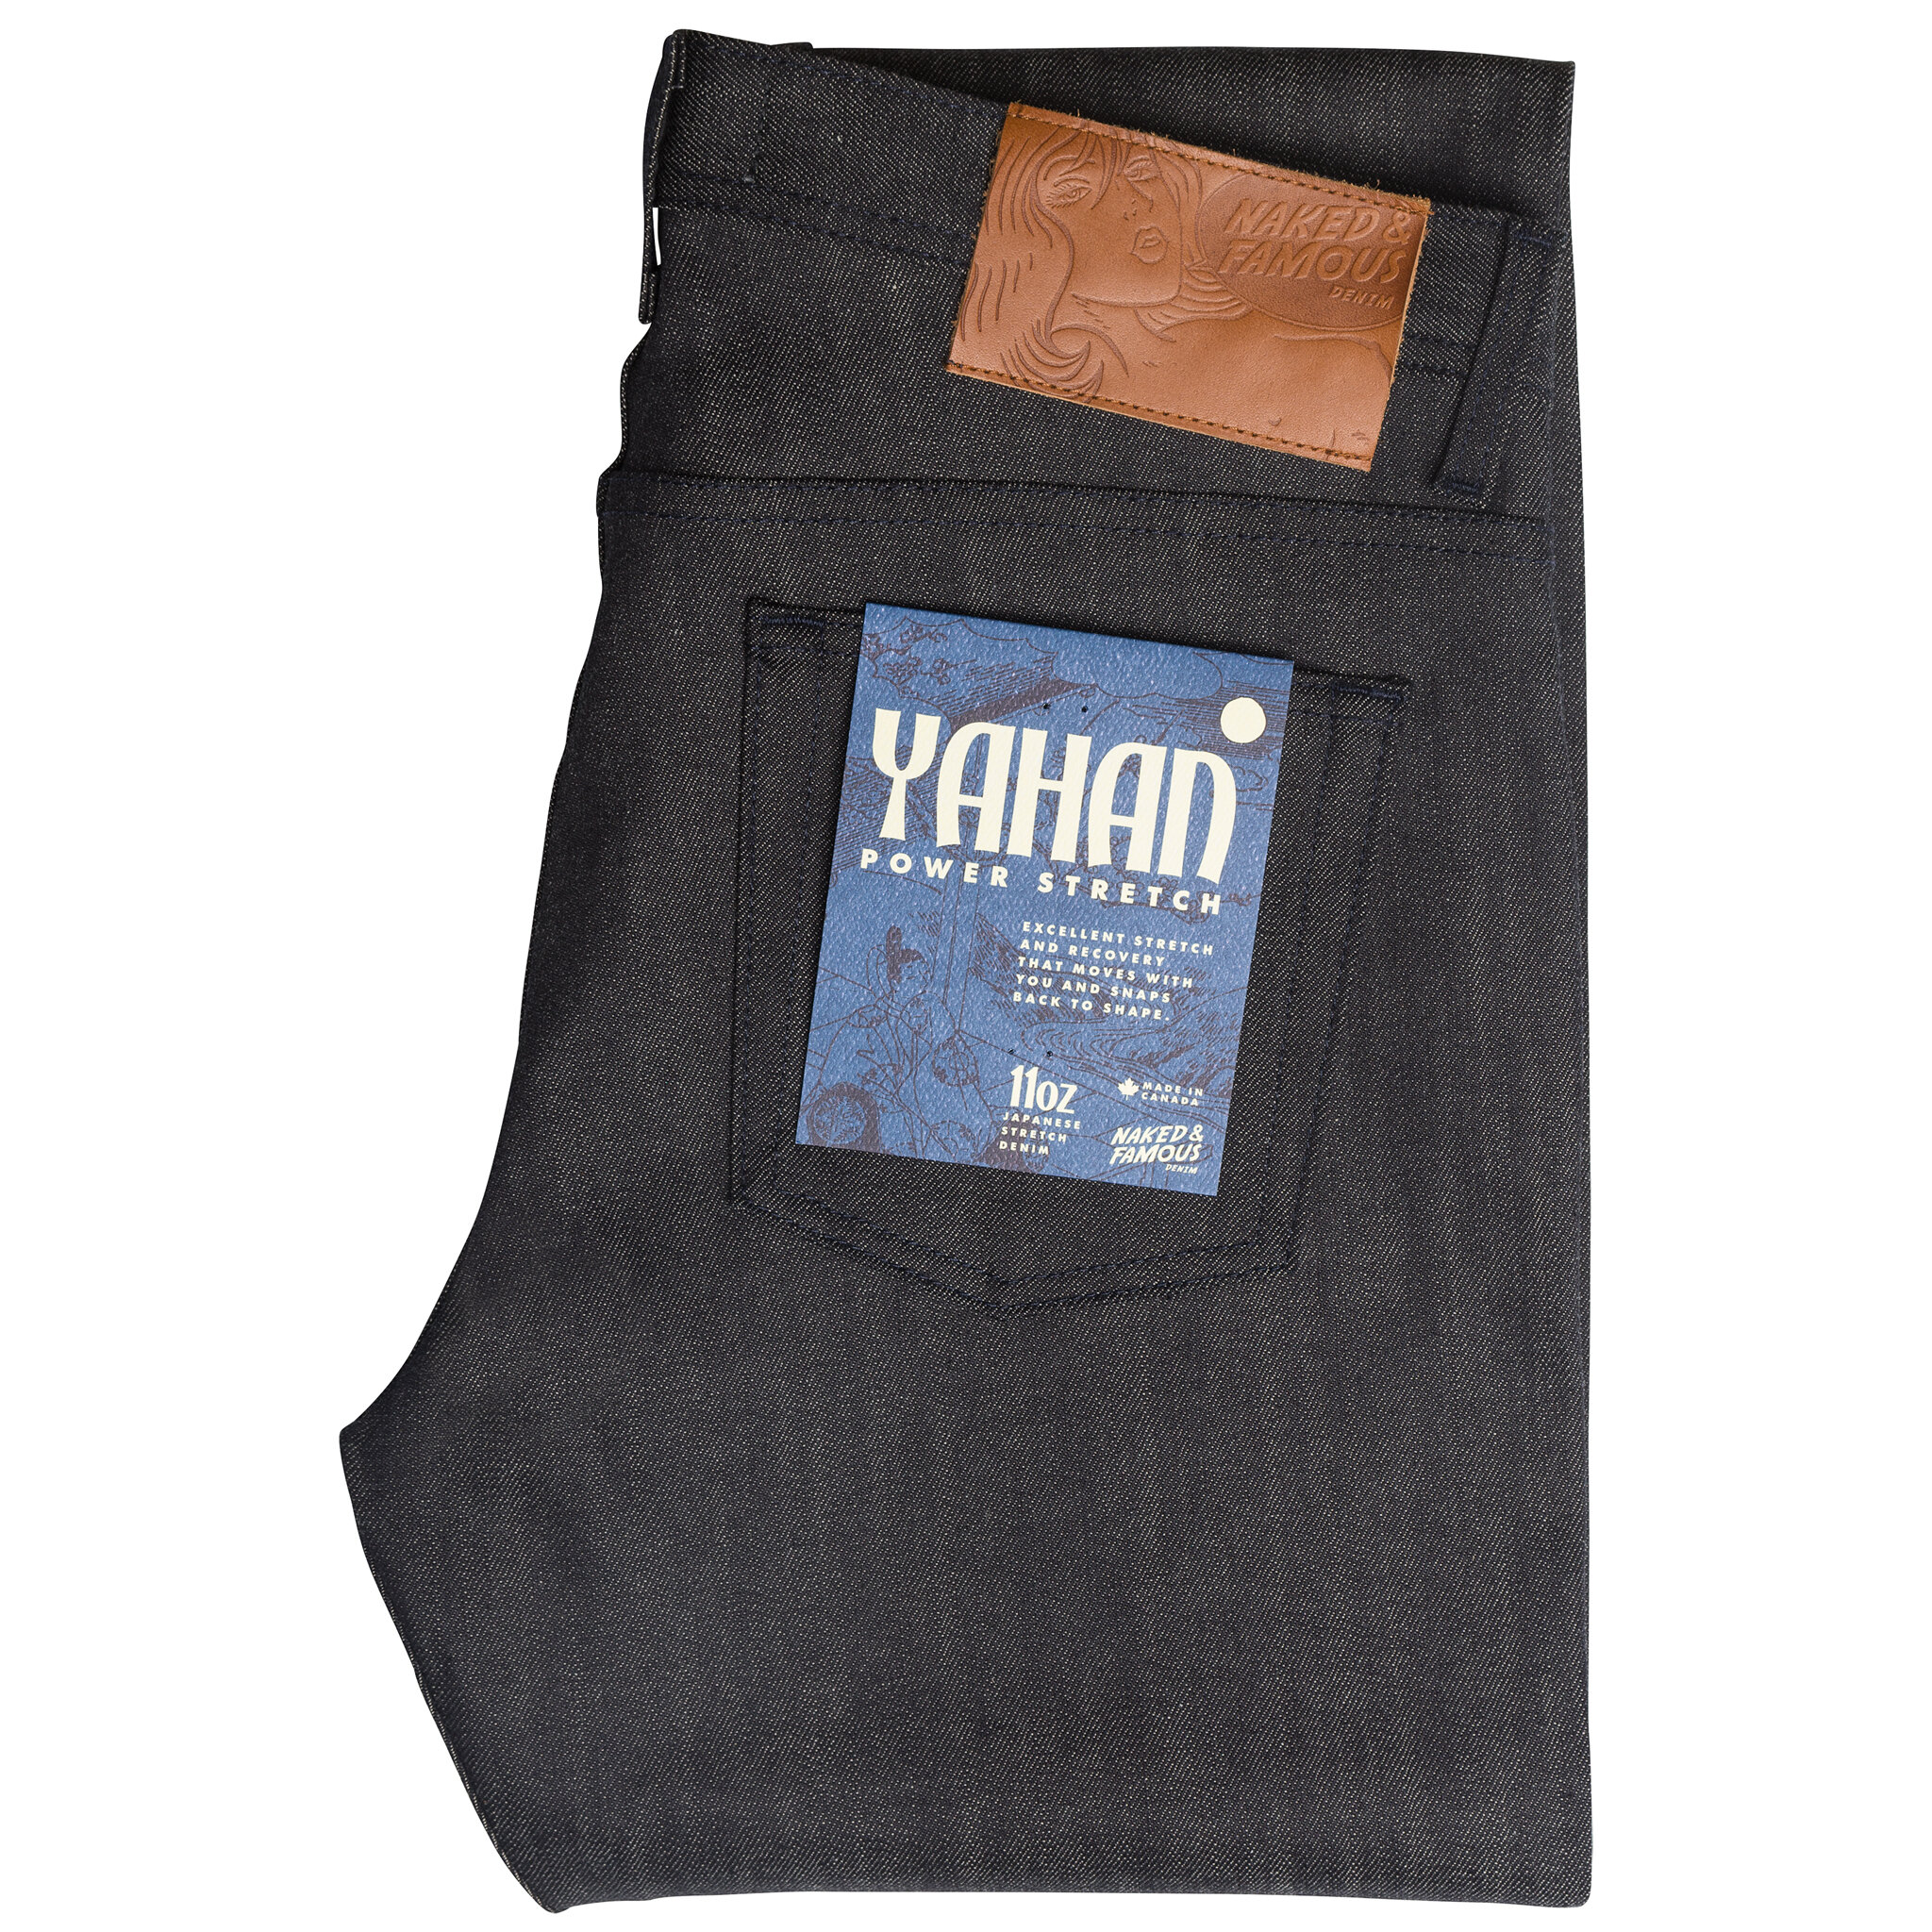  Yahan Power-Stretch jeans - folded 